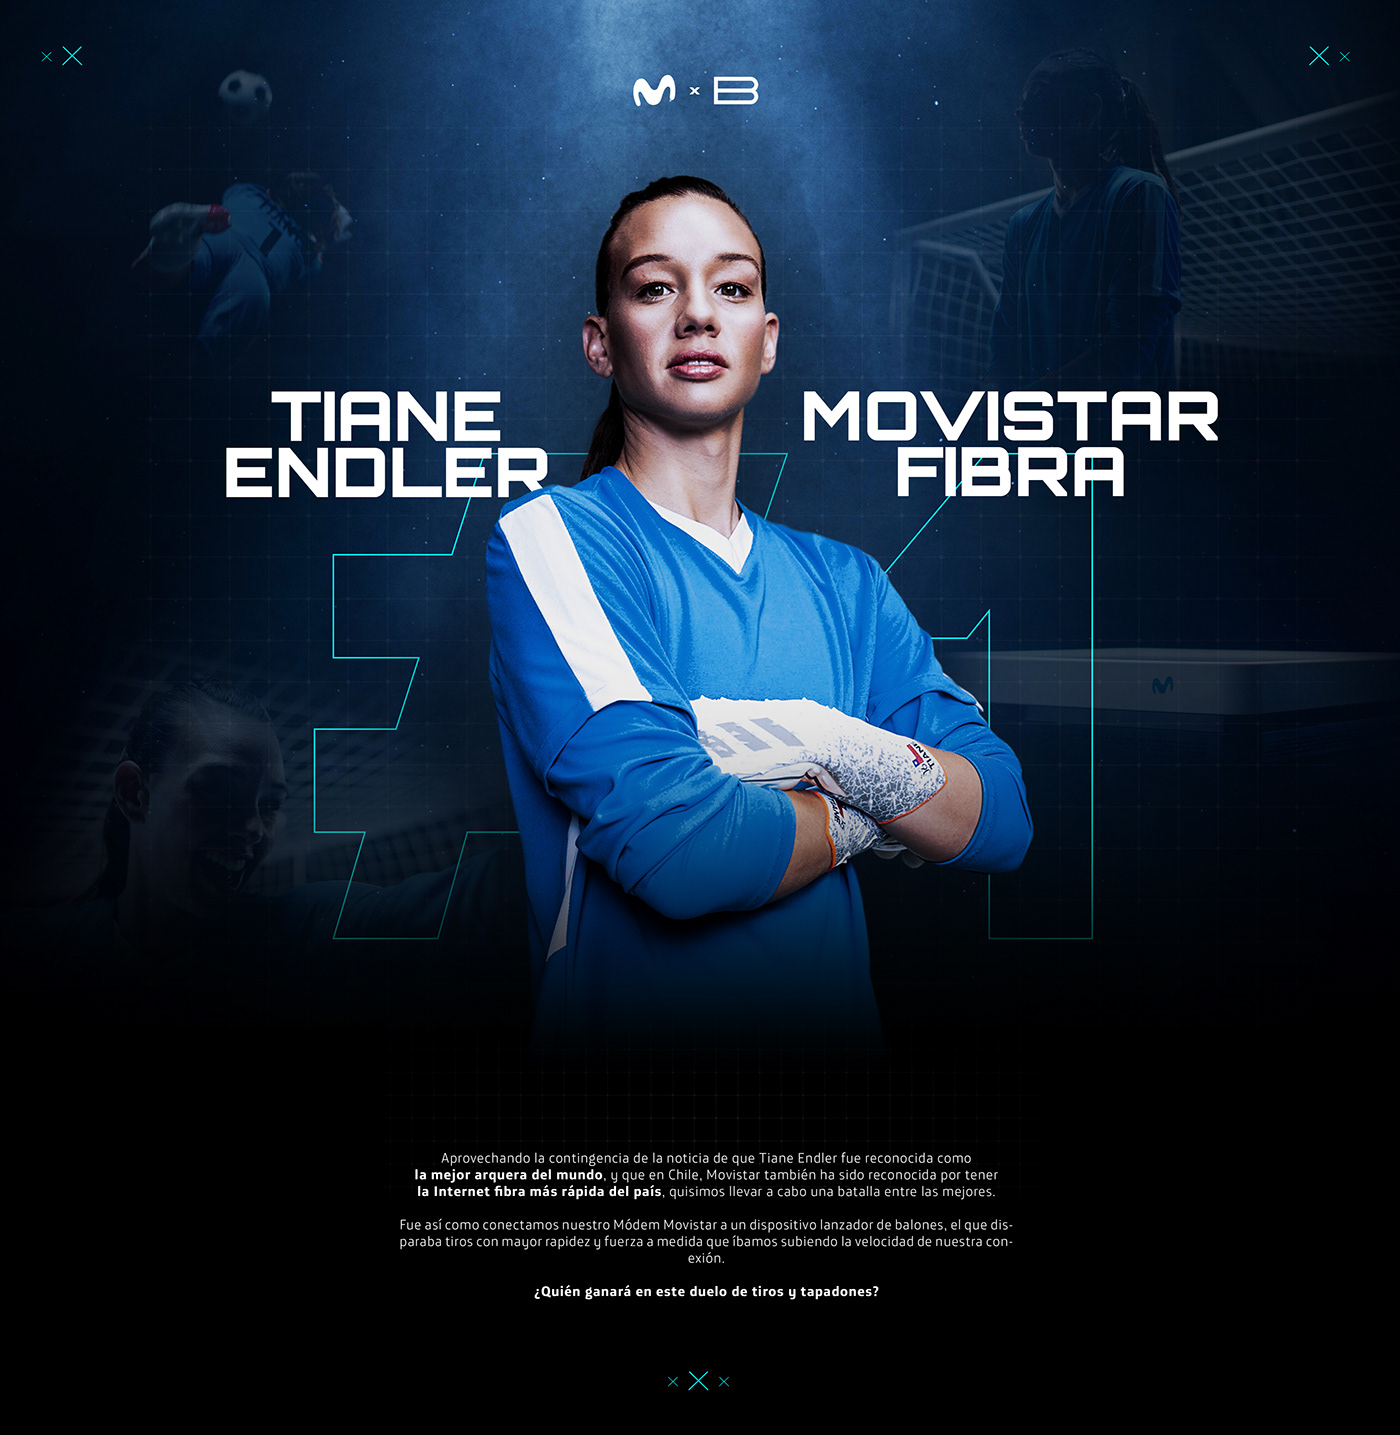 Futbol movistar Movistar fibra publicidad Telefonica tiane endler campaign ads ad